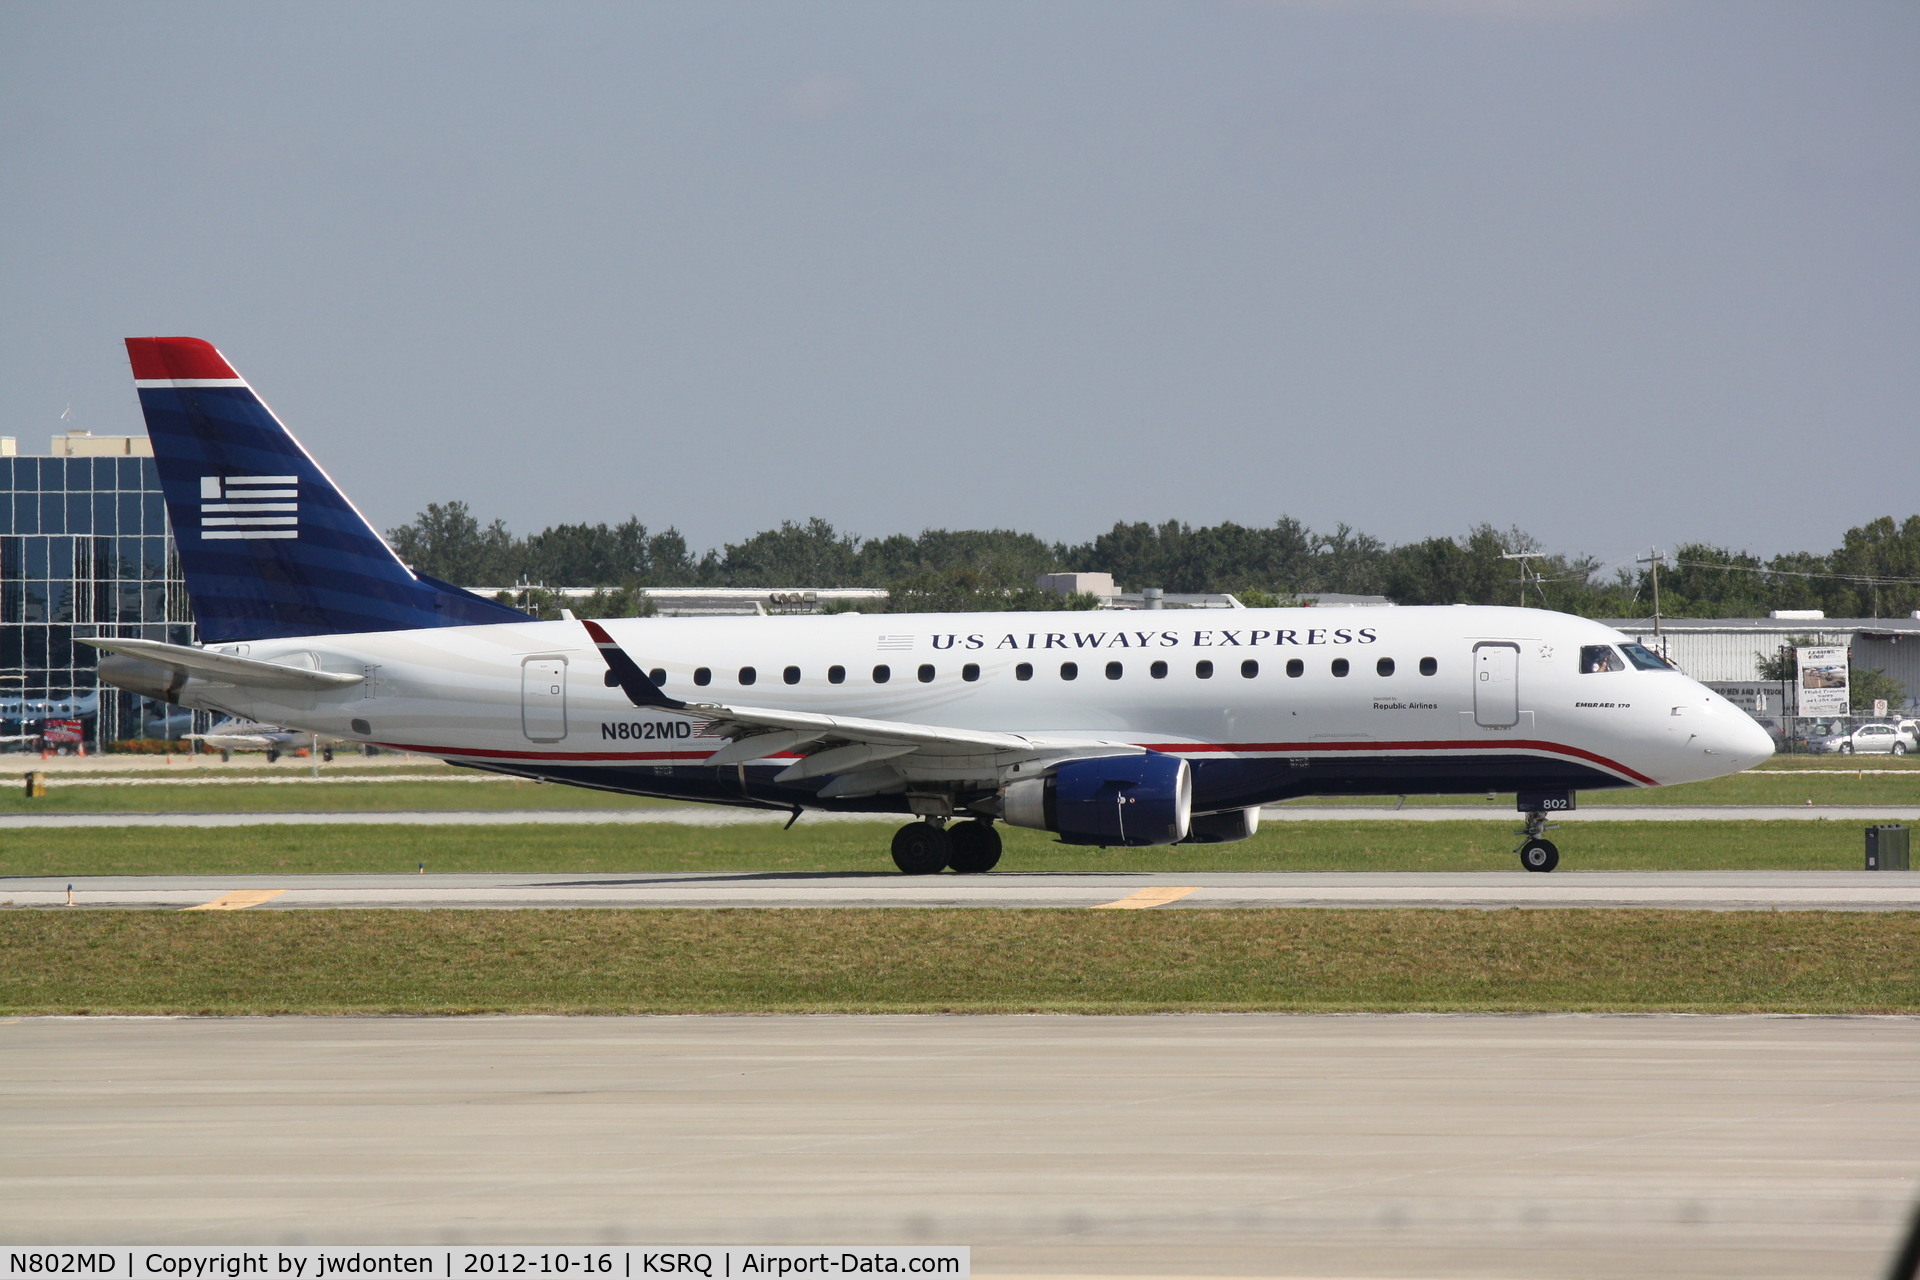 N802MD, 2004 Embraer 170SU (ERJ-170-100SU) C/N 17000013, US Air Flight 3327 operated by Republic (N802MD) arrives at Sarasota-Bradenton International Airport following a flight from Reagan National Airport